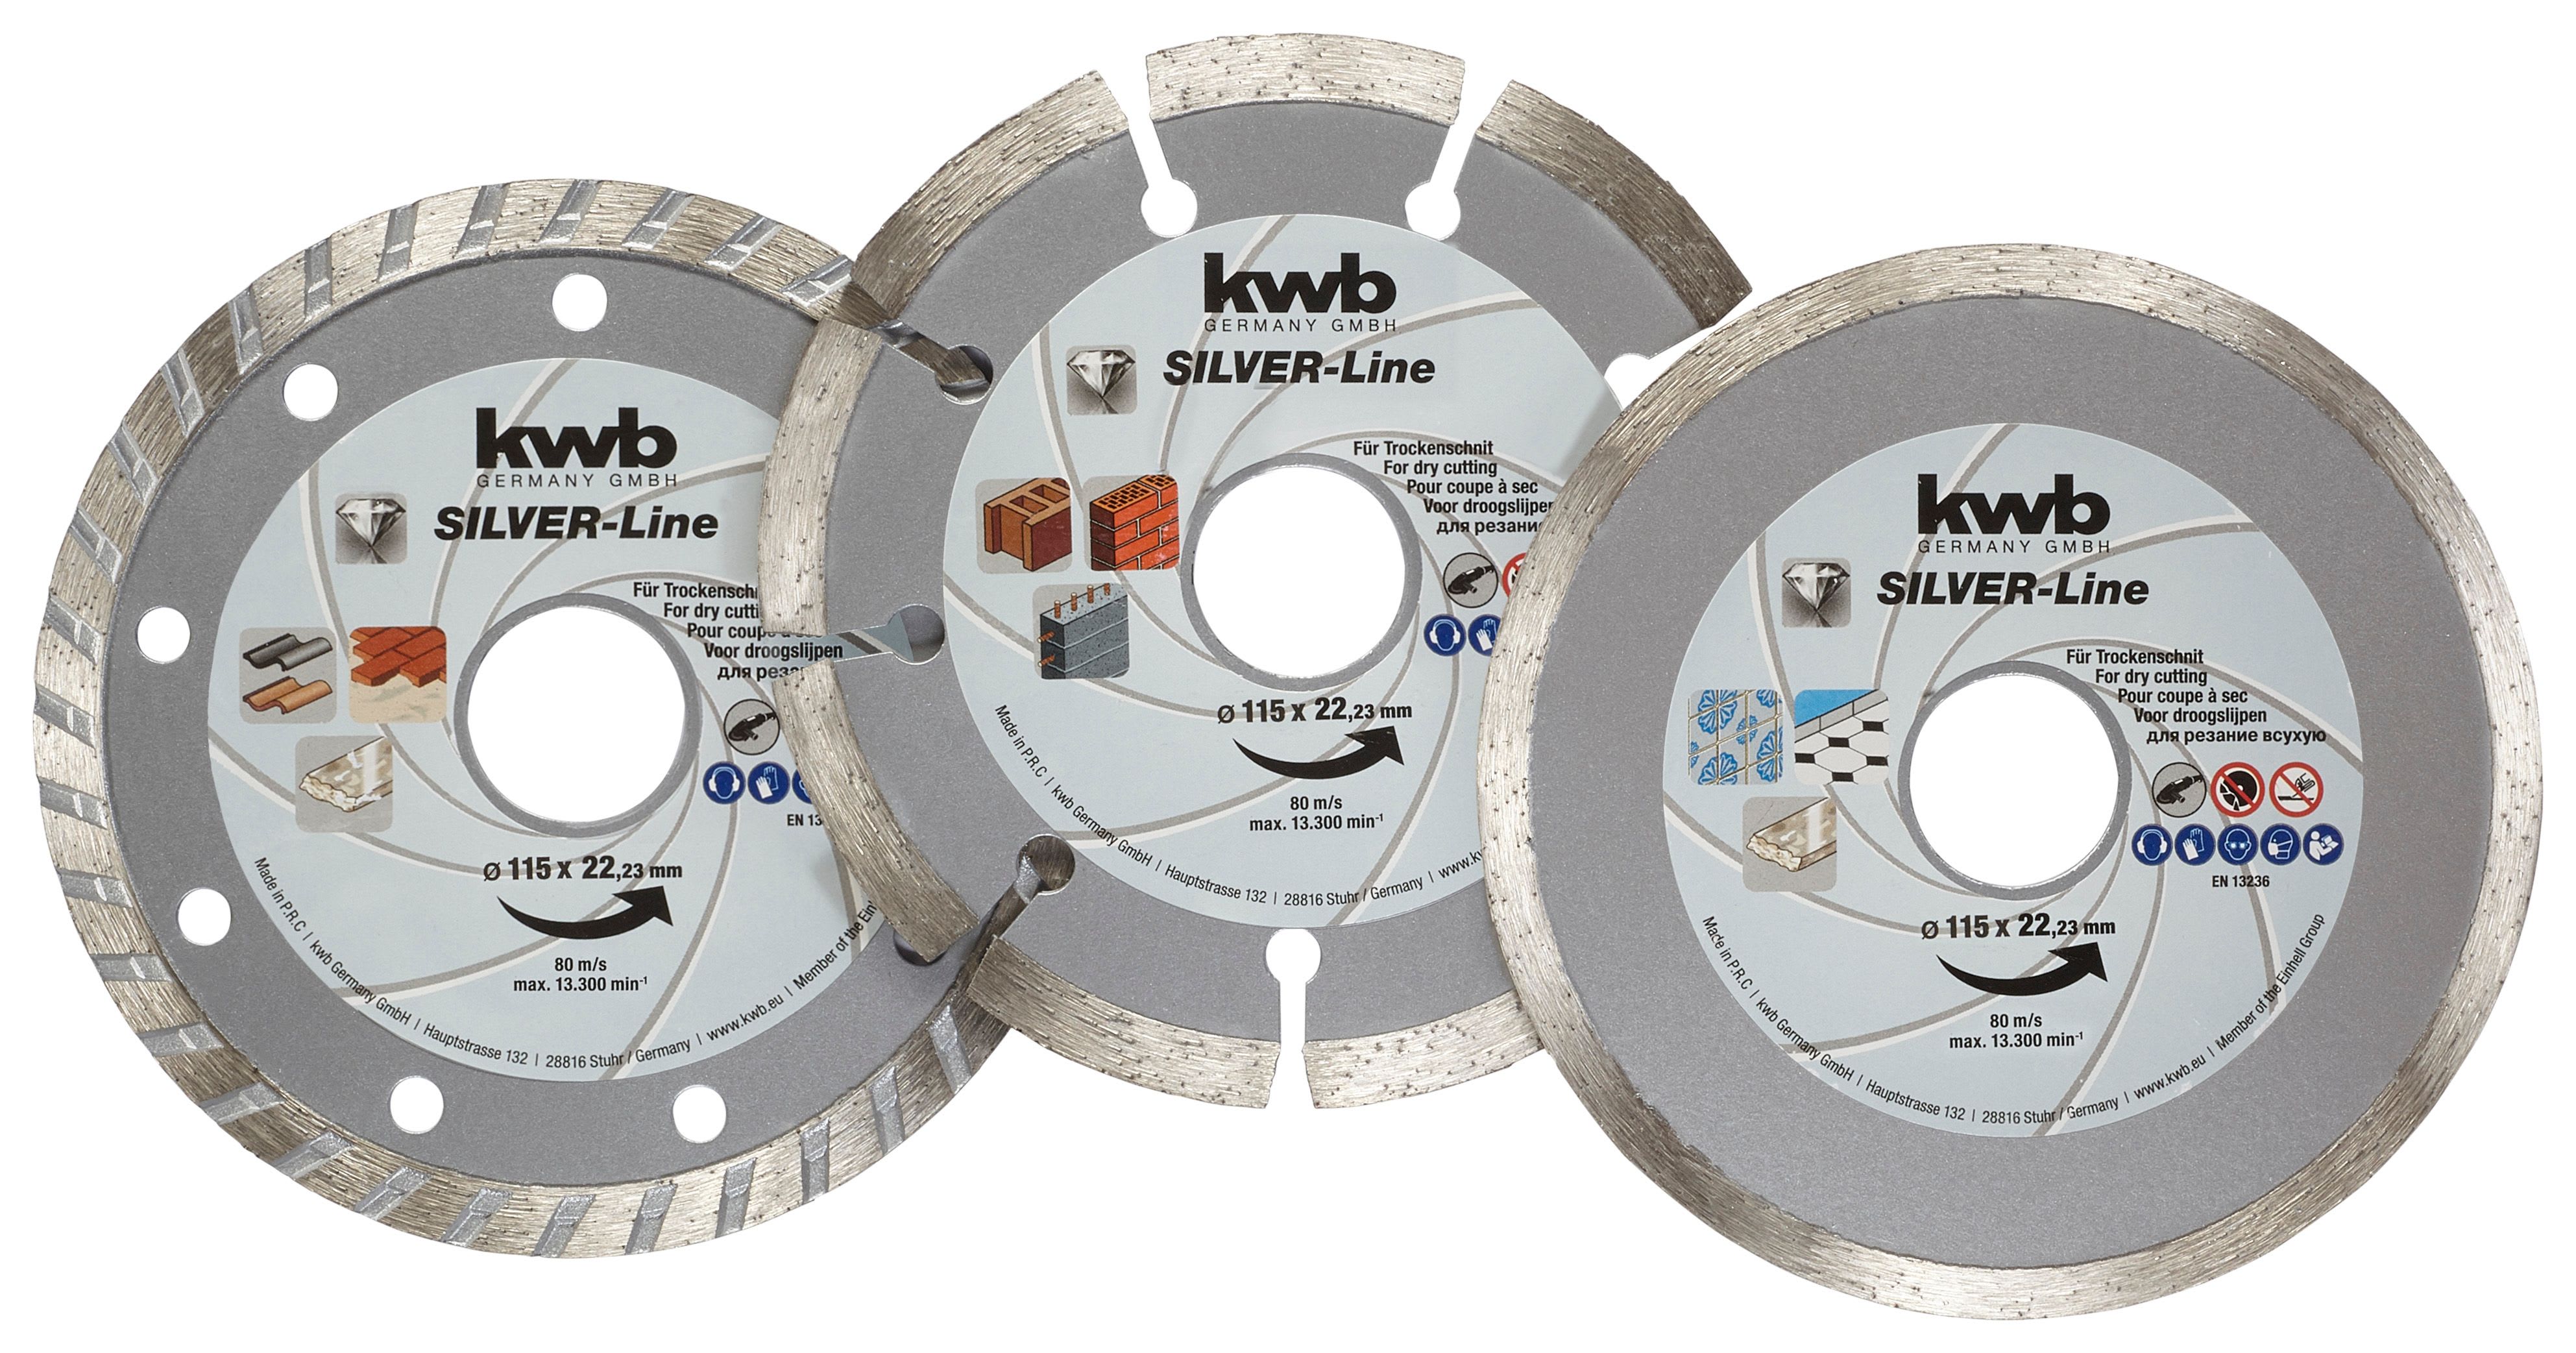 Einhell kwb Diamond Cutting Discs - 115mm Pack